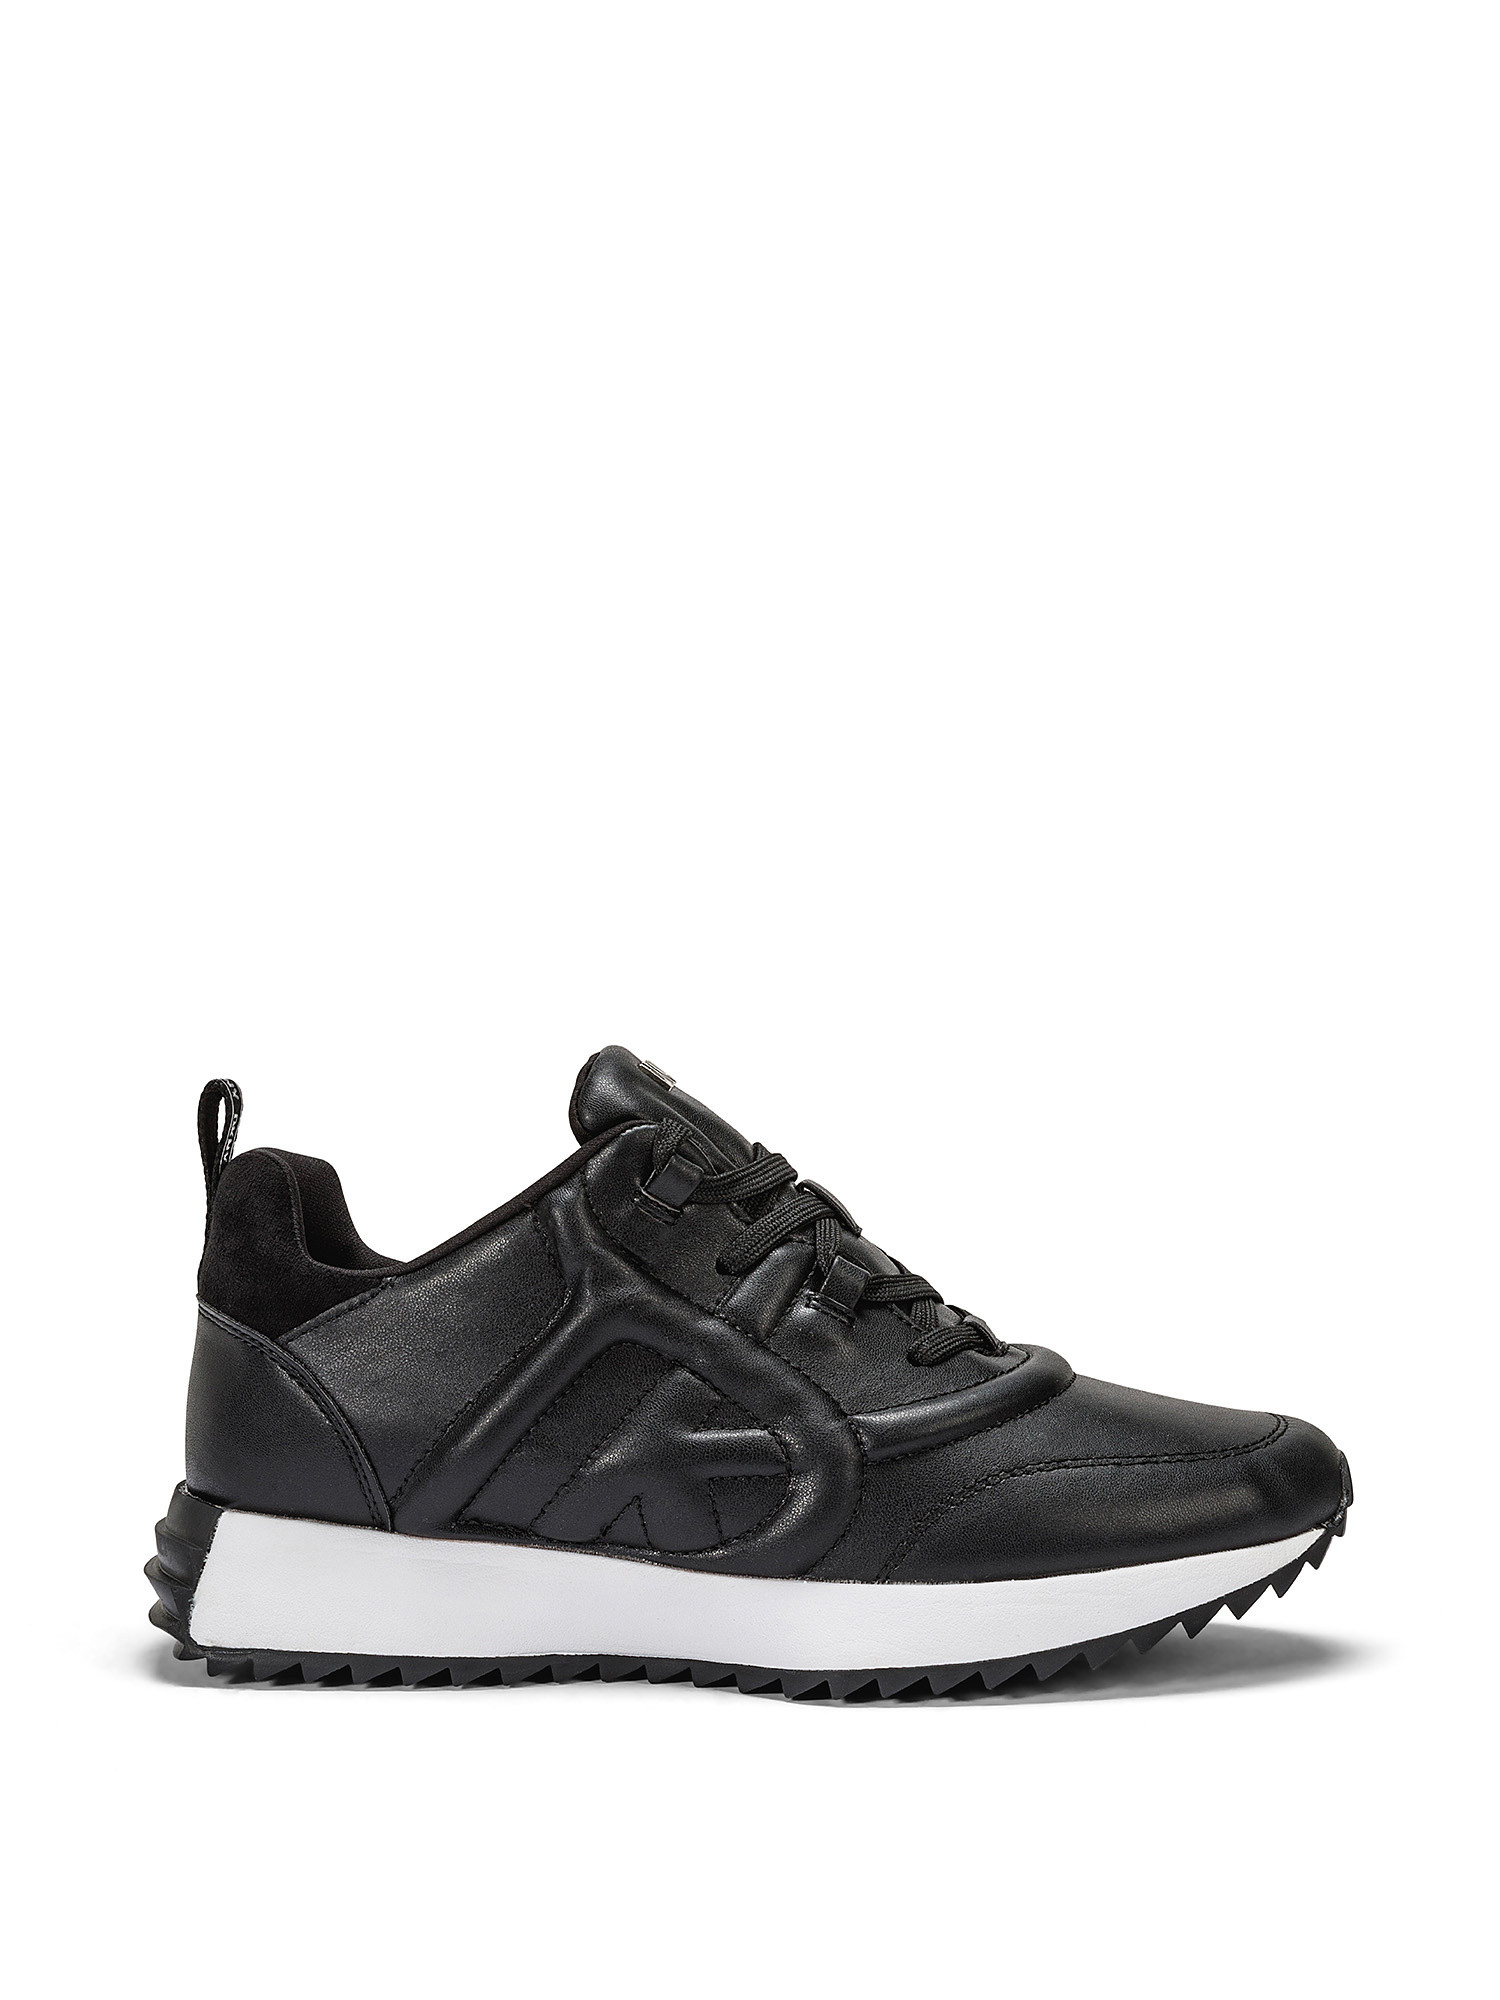 DKNY - Sneakers NIX, Nero, large image number 0